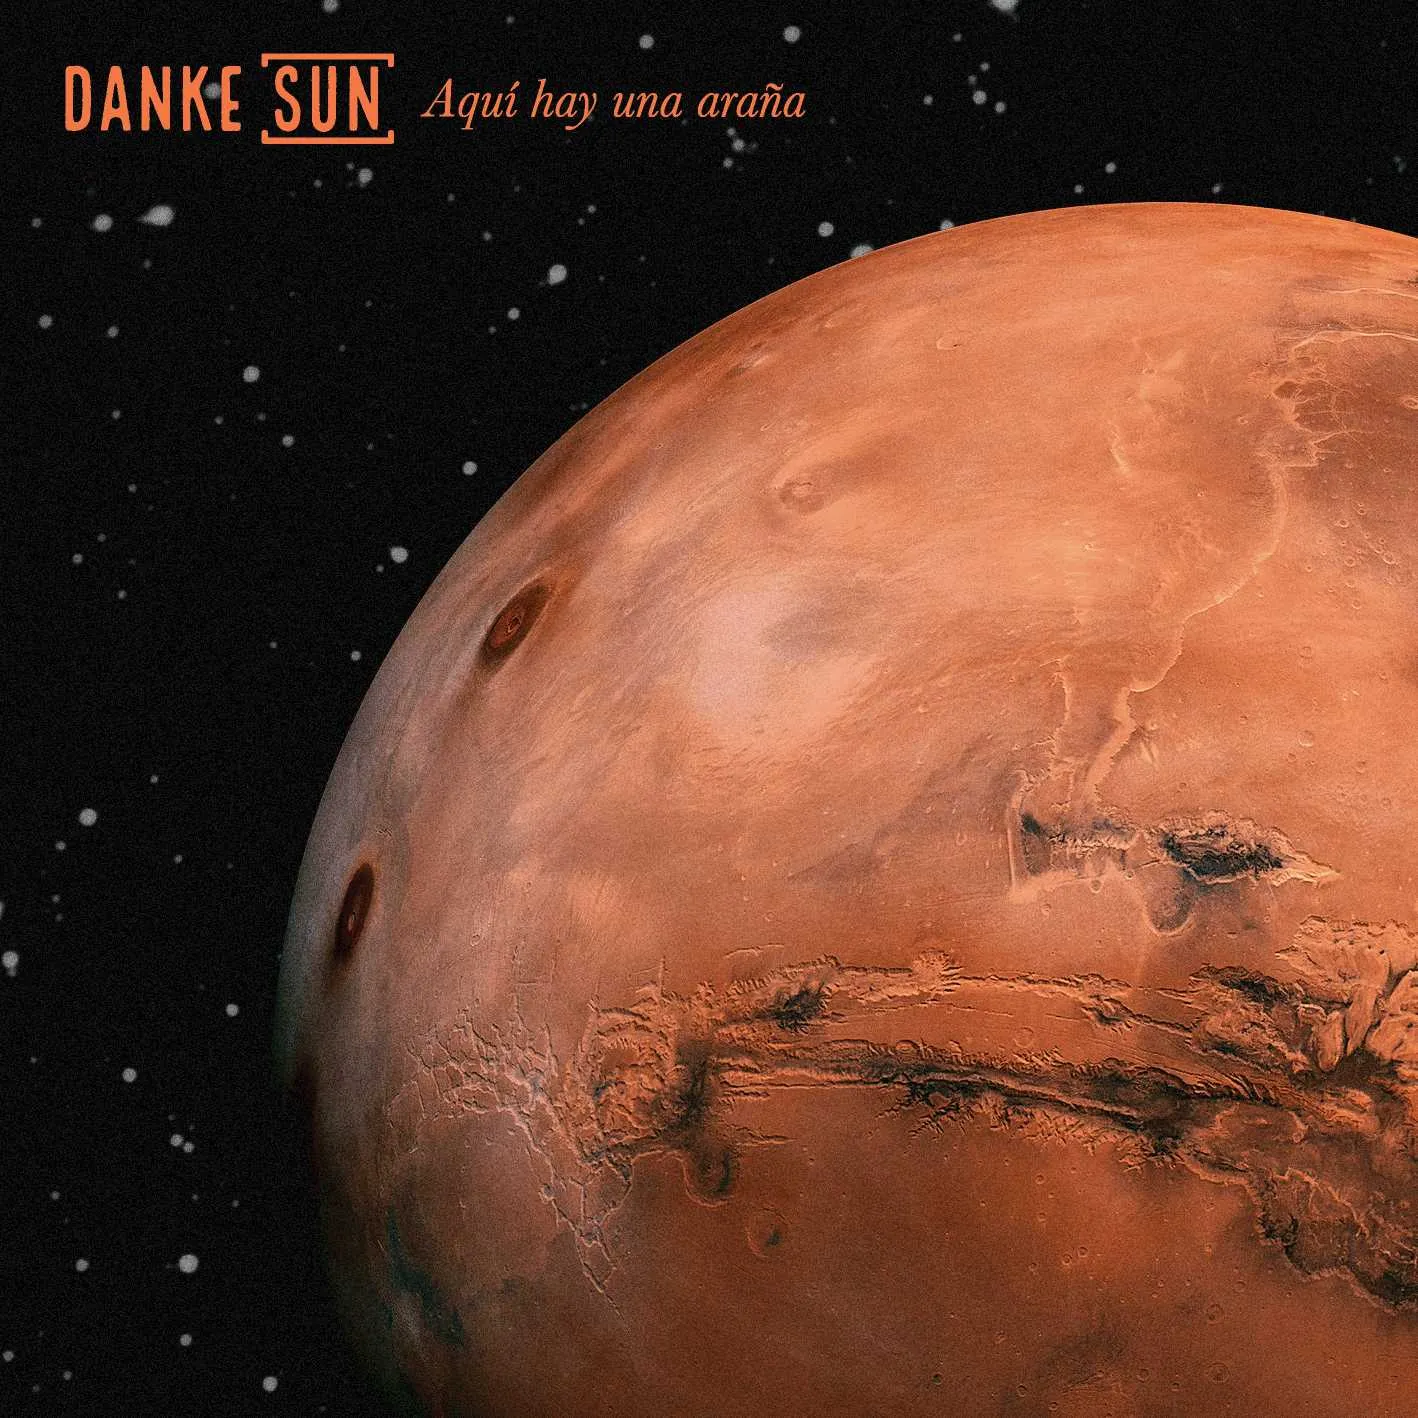 Album cover for “Aquí hay una araña” by Danke Sun